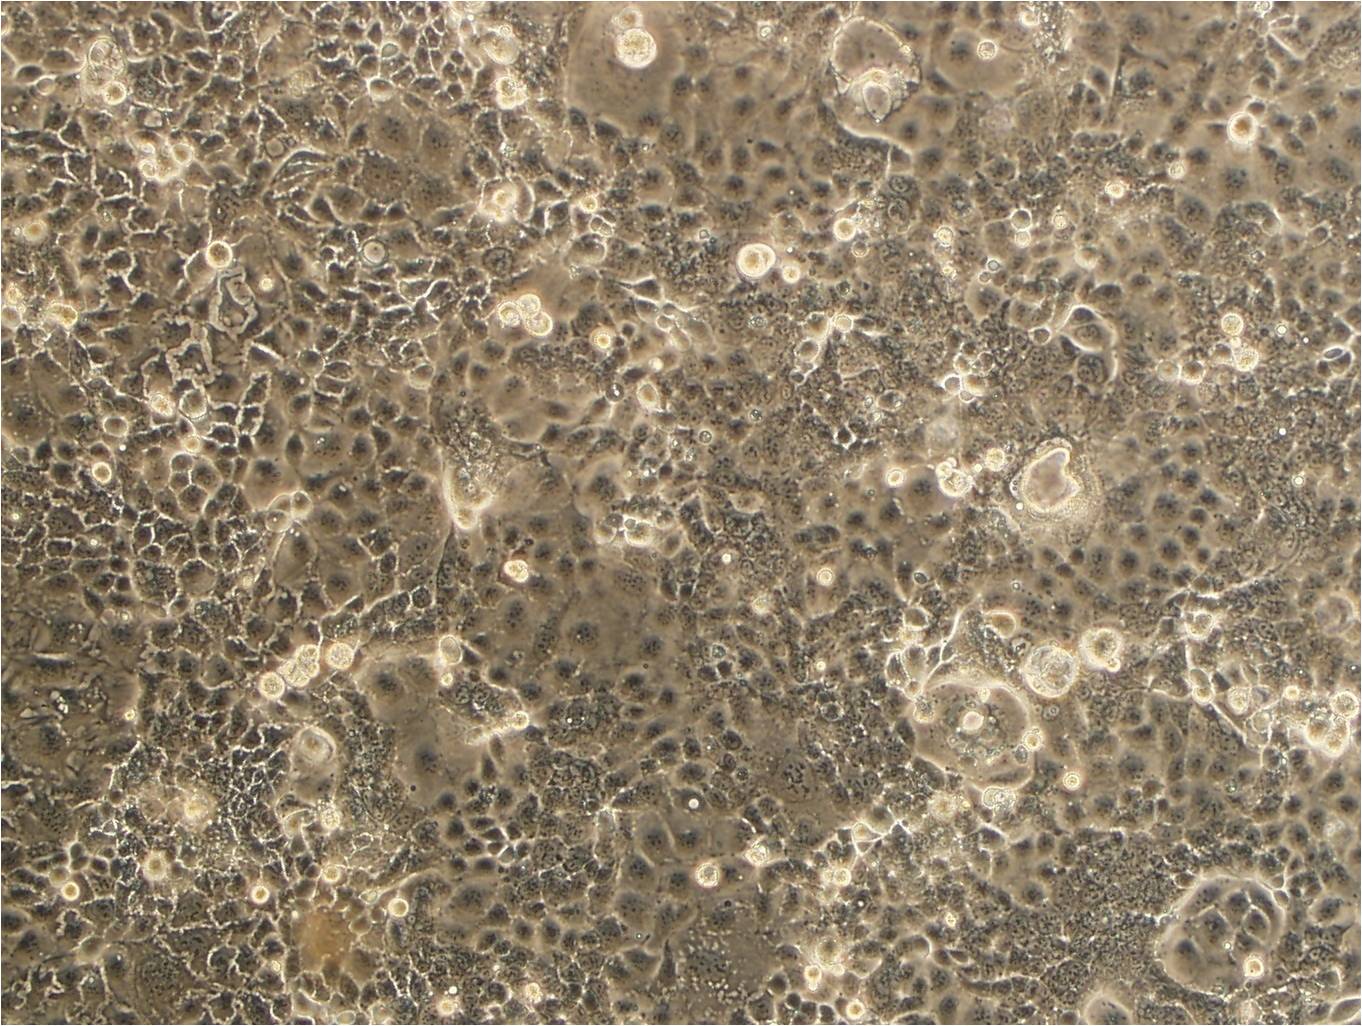 BT-325 Cell:人脑多型胶质母细胞系